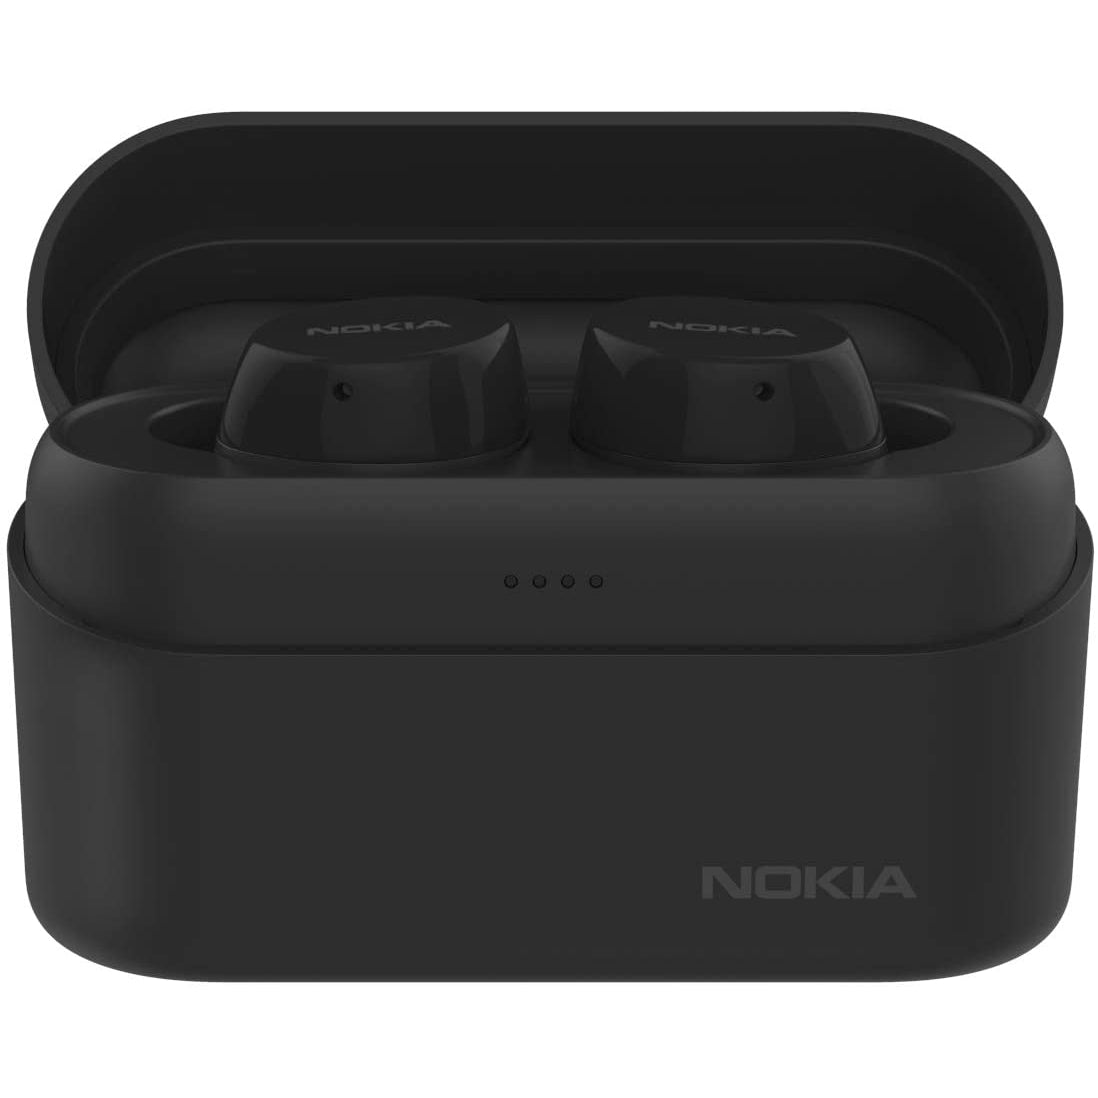 Nokia Power BH-605 Wireless Earbuds with Bluetooth, Black - Refurbished Pristine